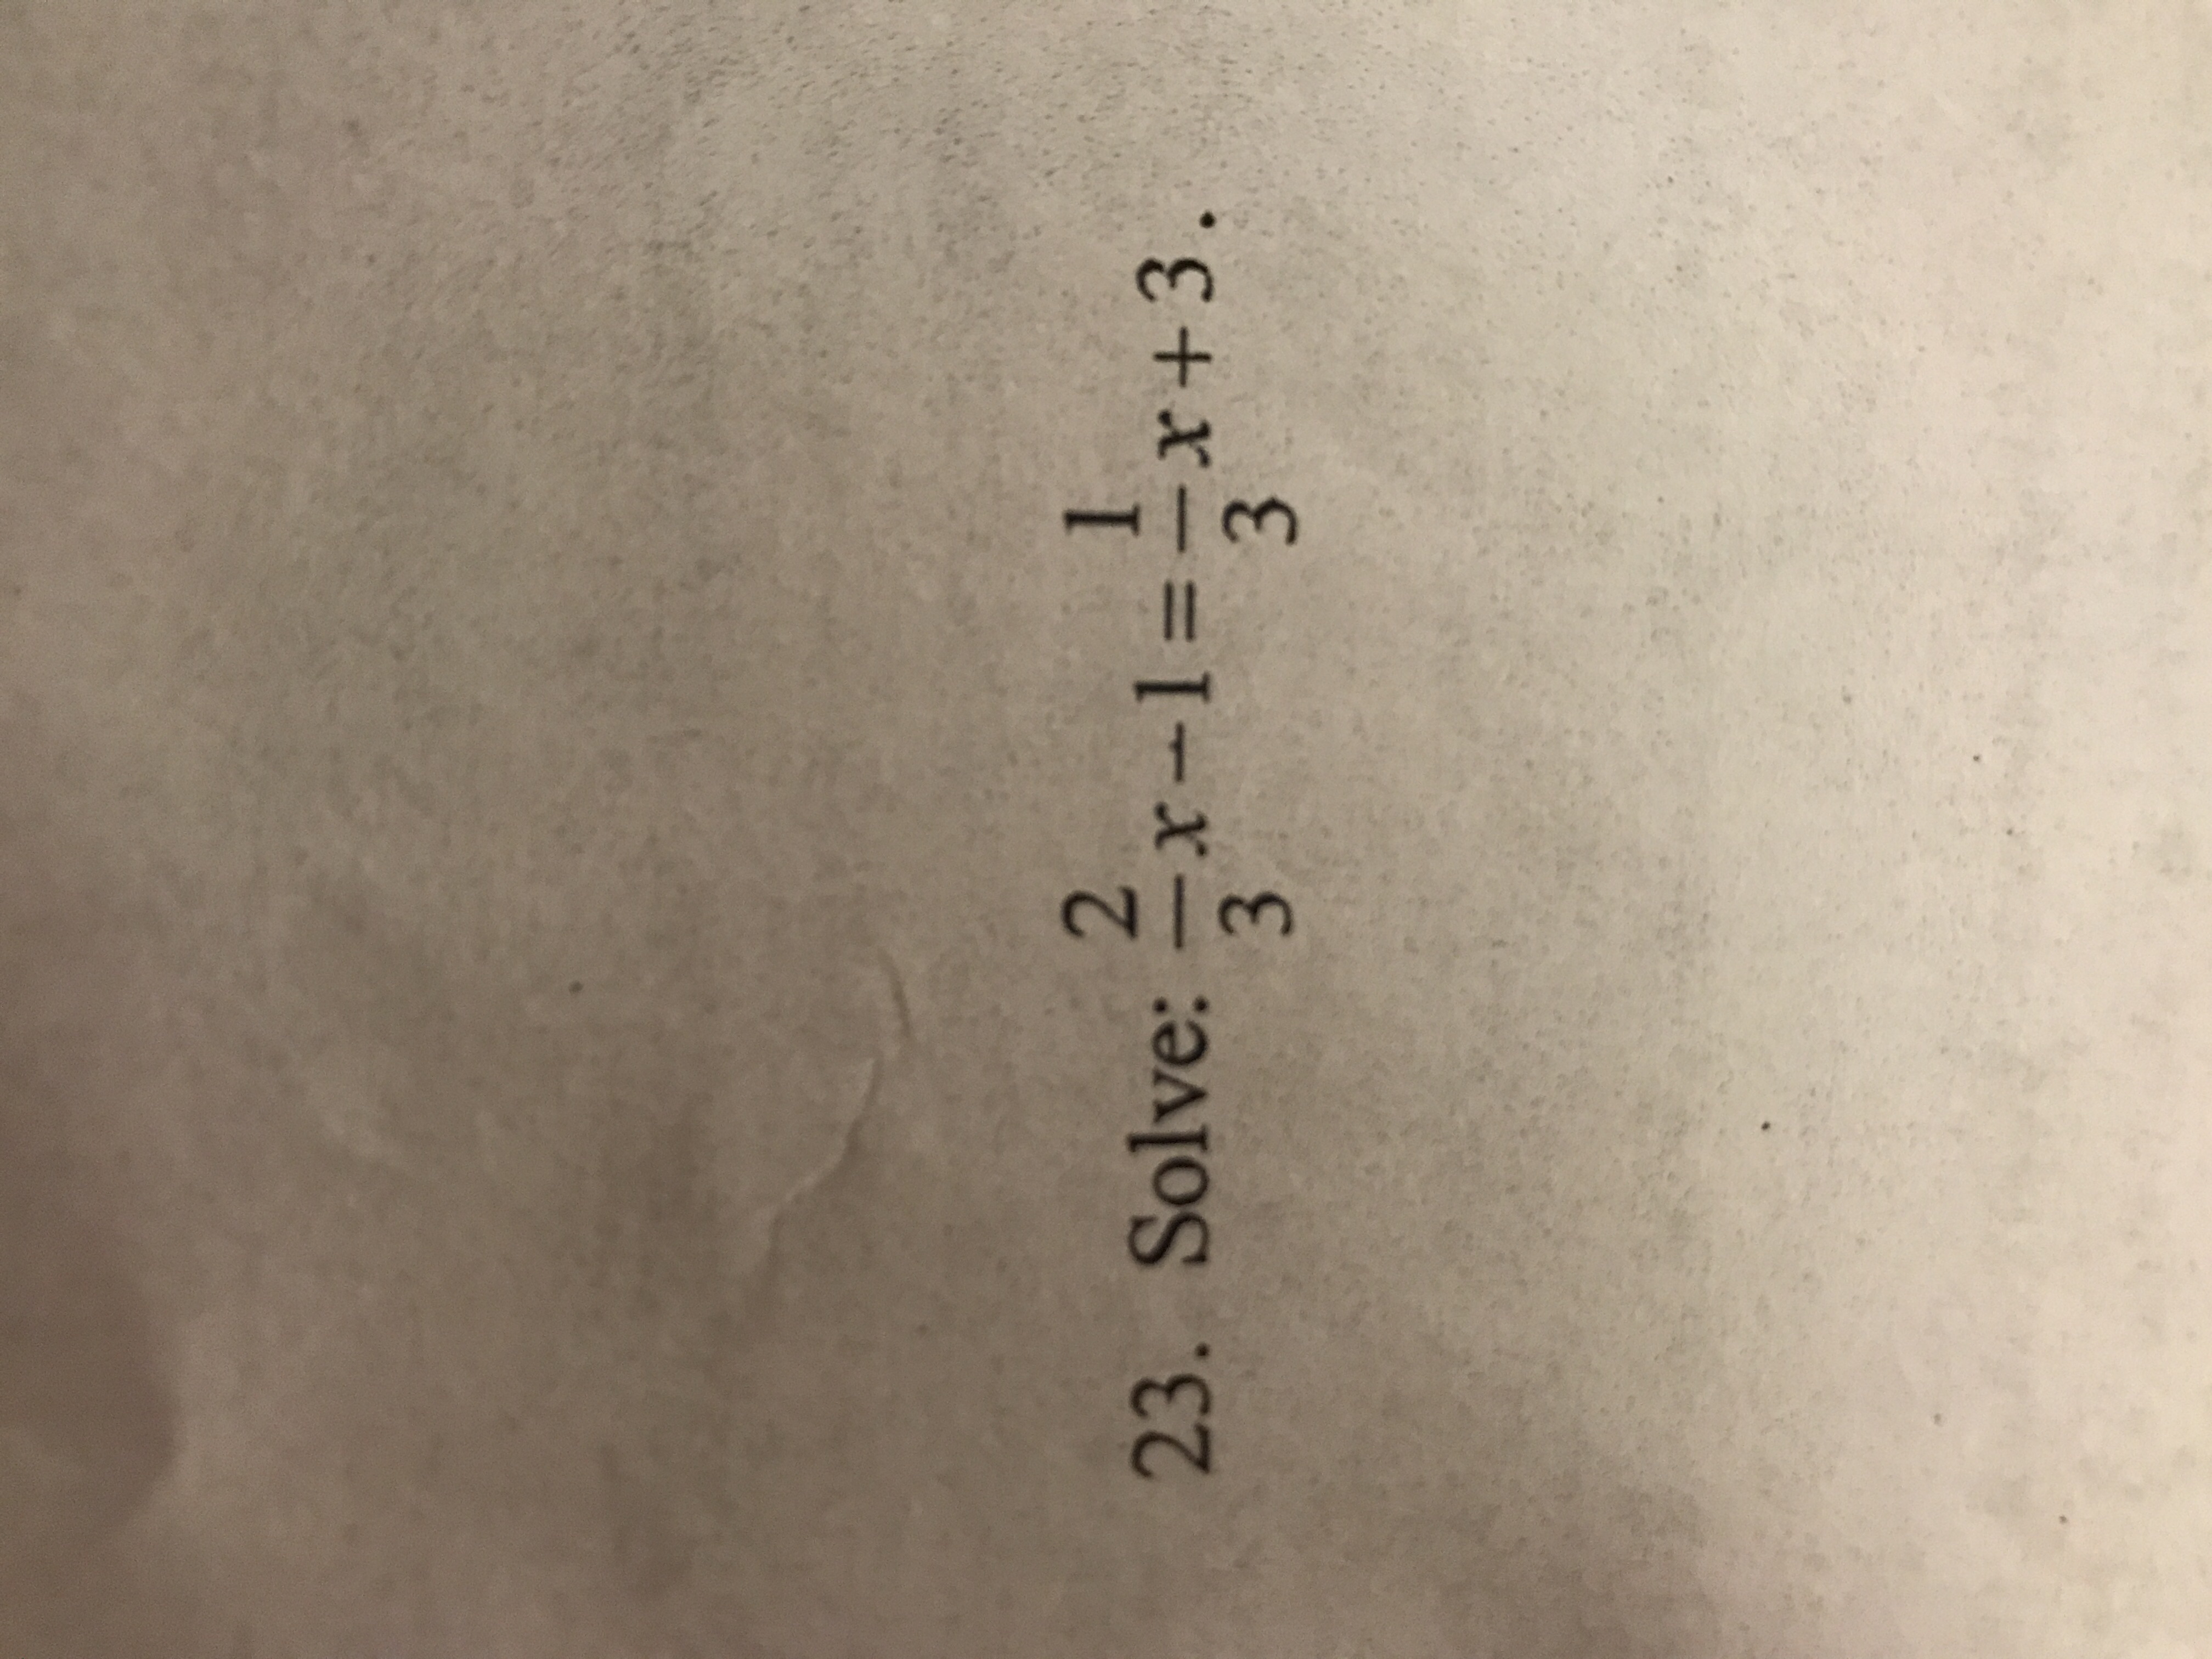 2
23.
Solve:-x-1=-x+3
3
